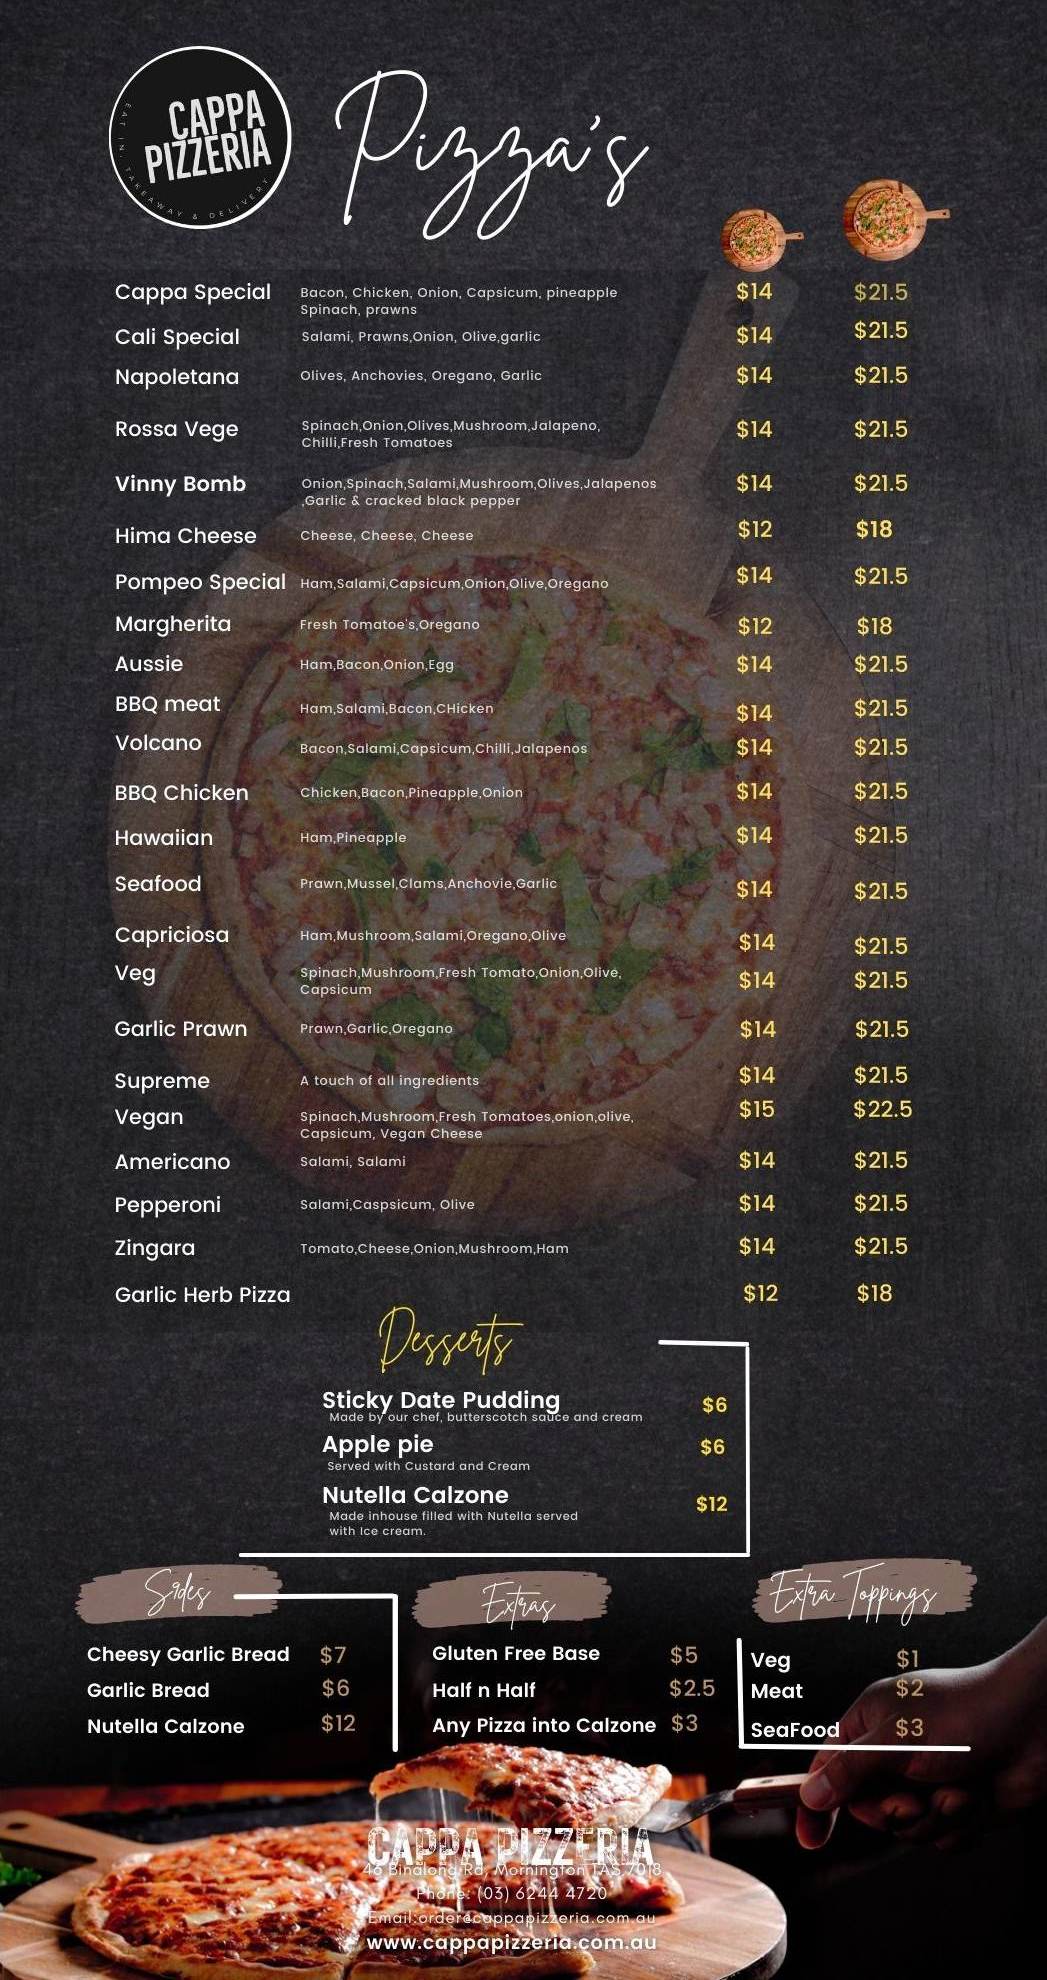 Cappa Pizzeria menu image